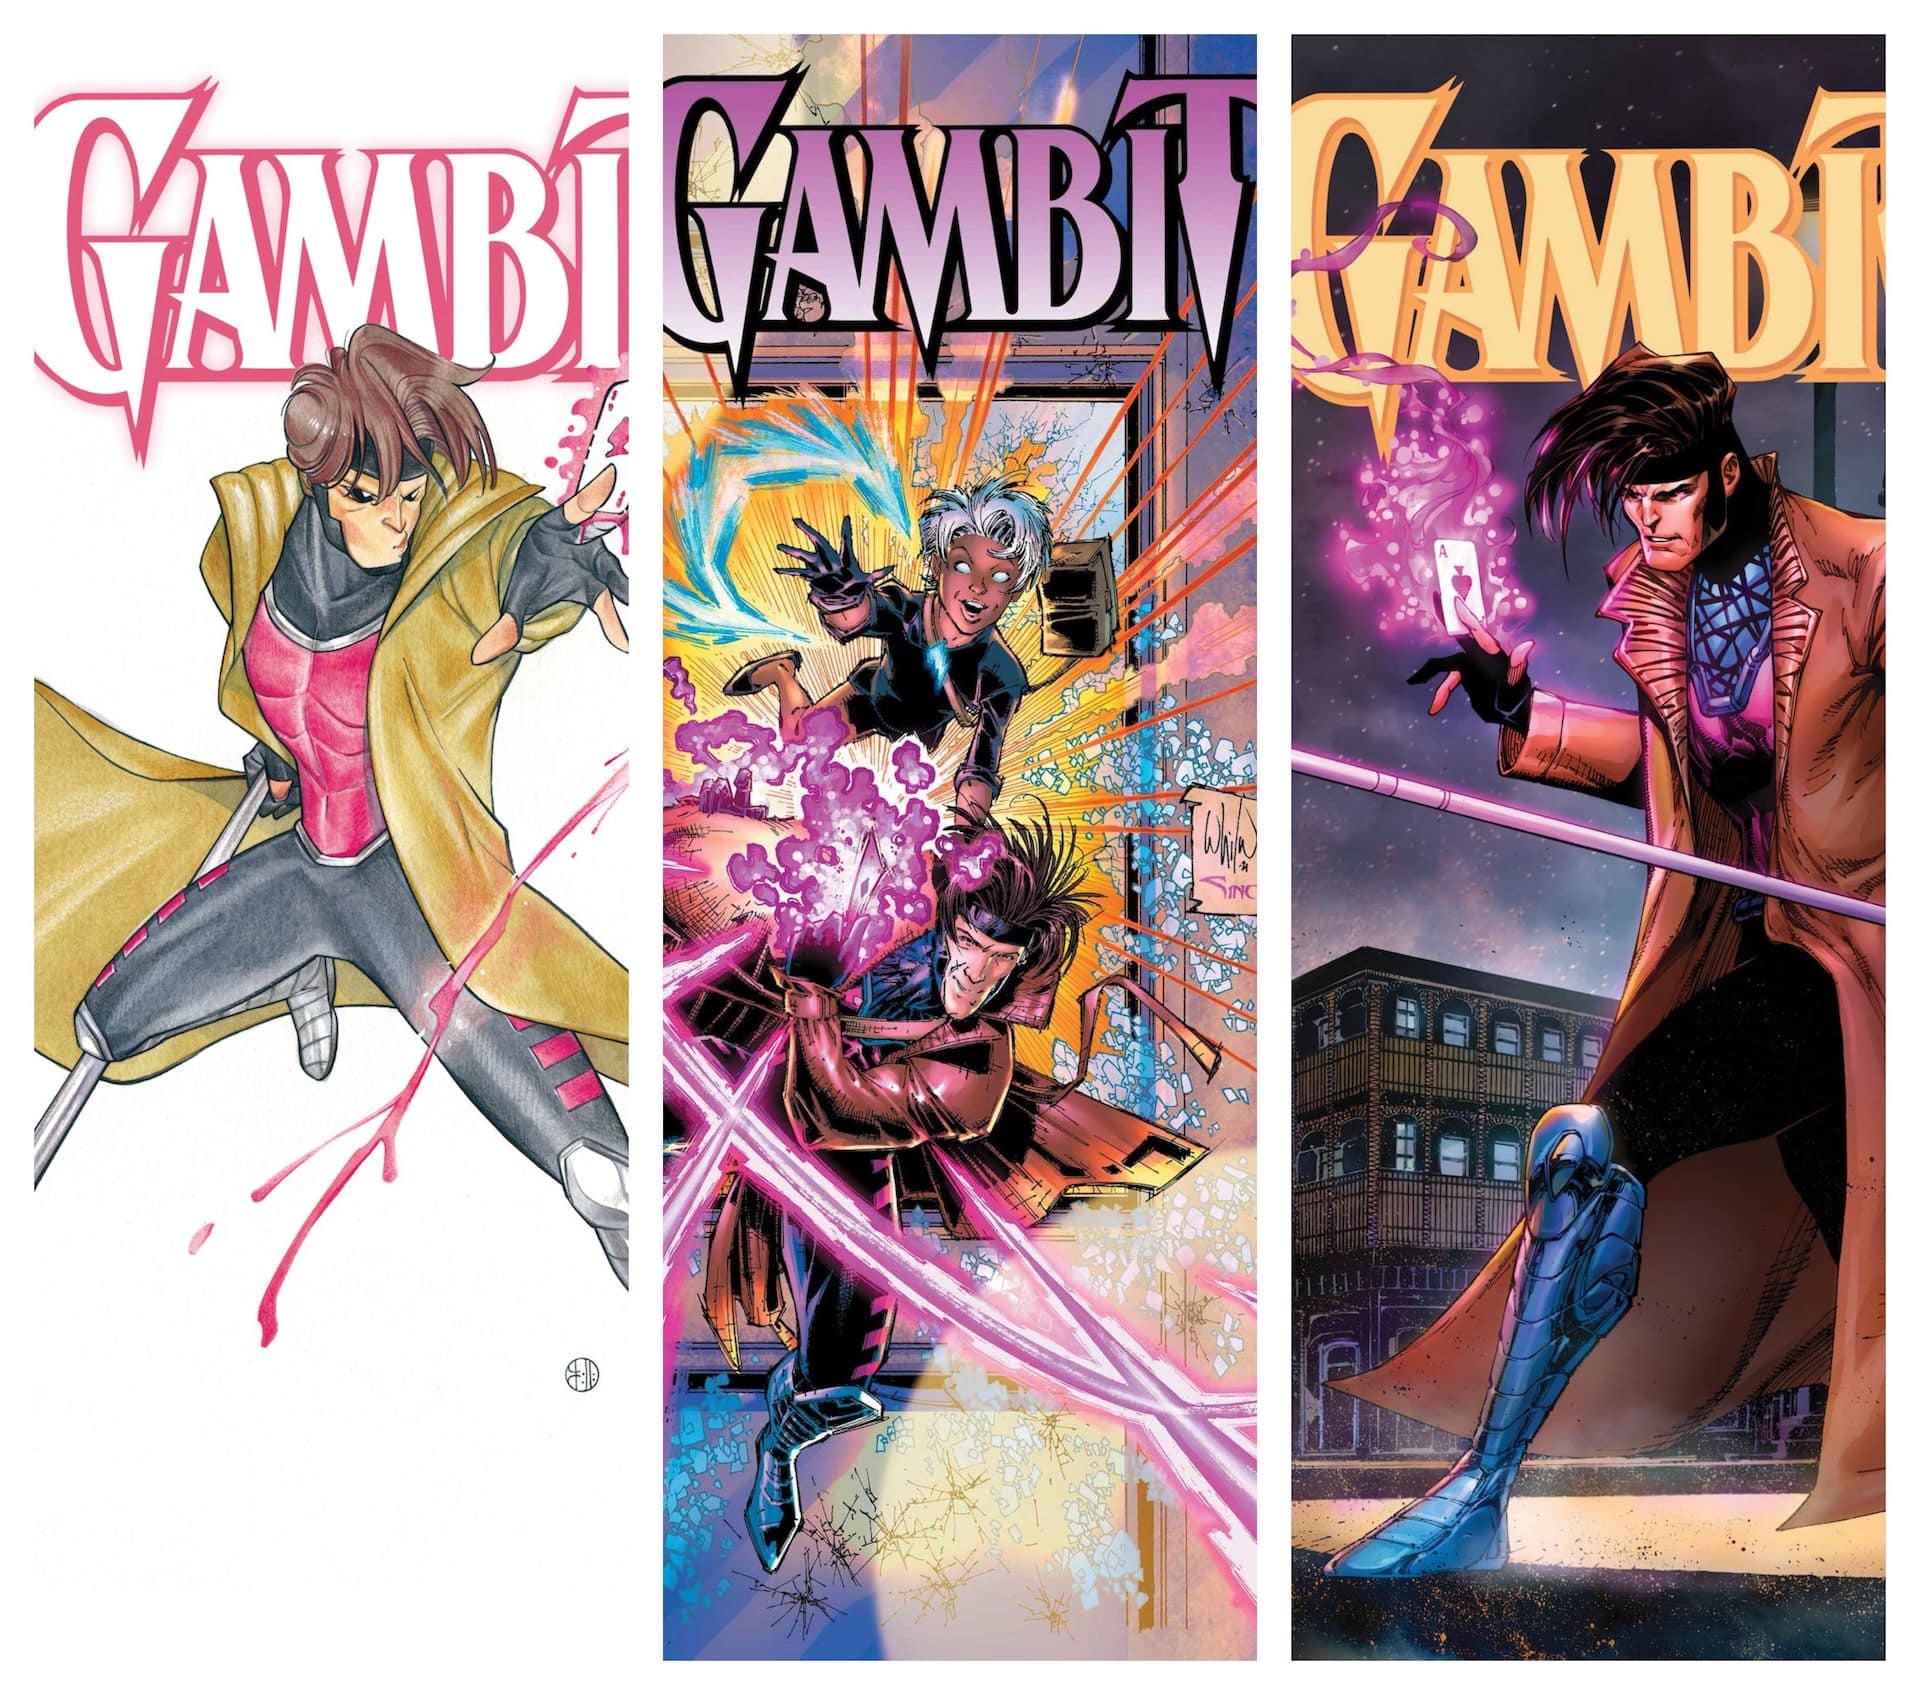 Marvel gives sneak peek at Chris Claremont return with 'Gambit' #1